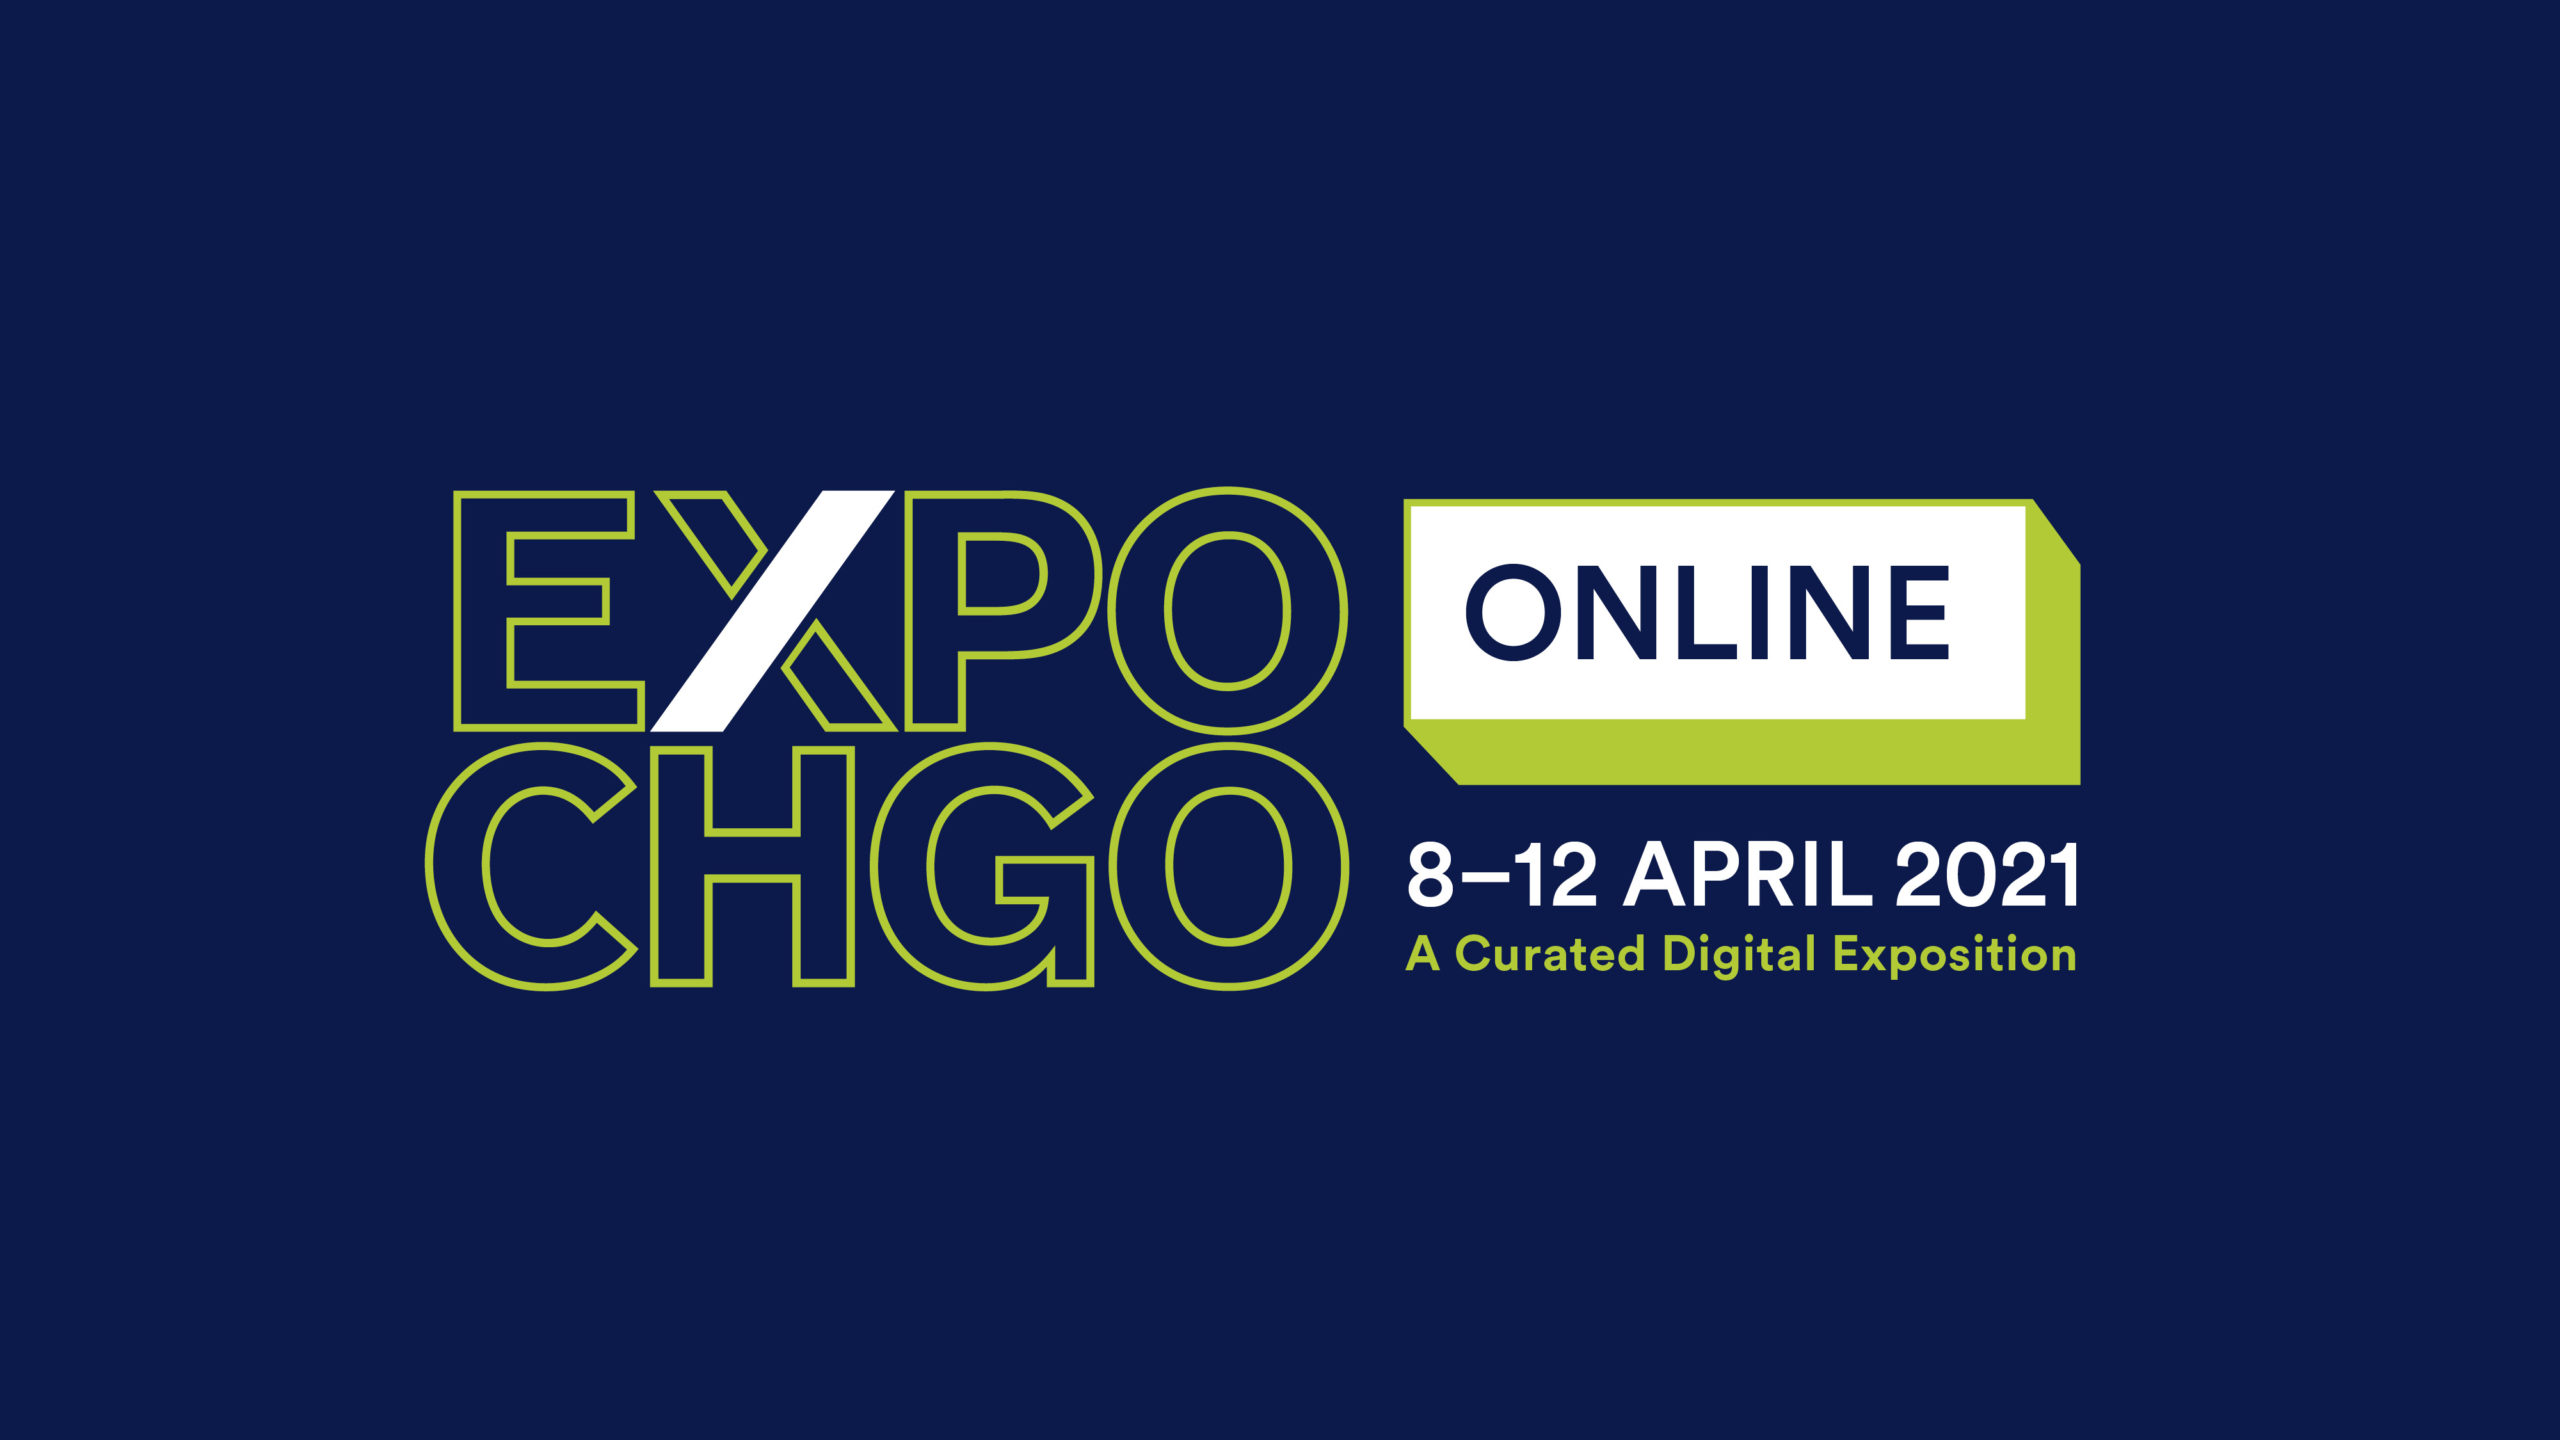 EXPO CHGO ONLINE April 8-12, 2021